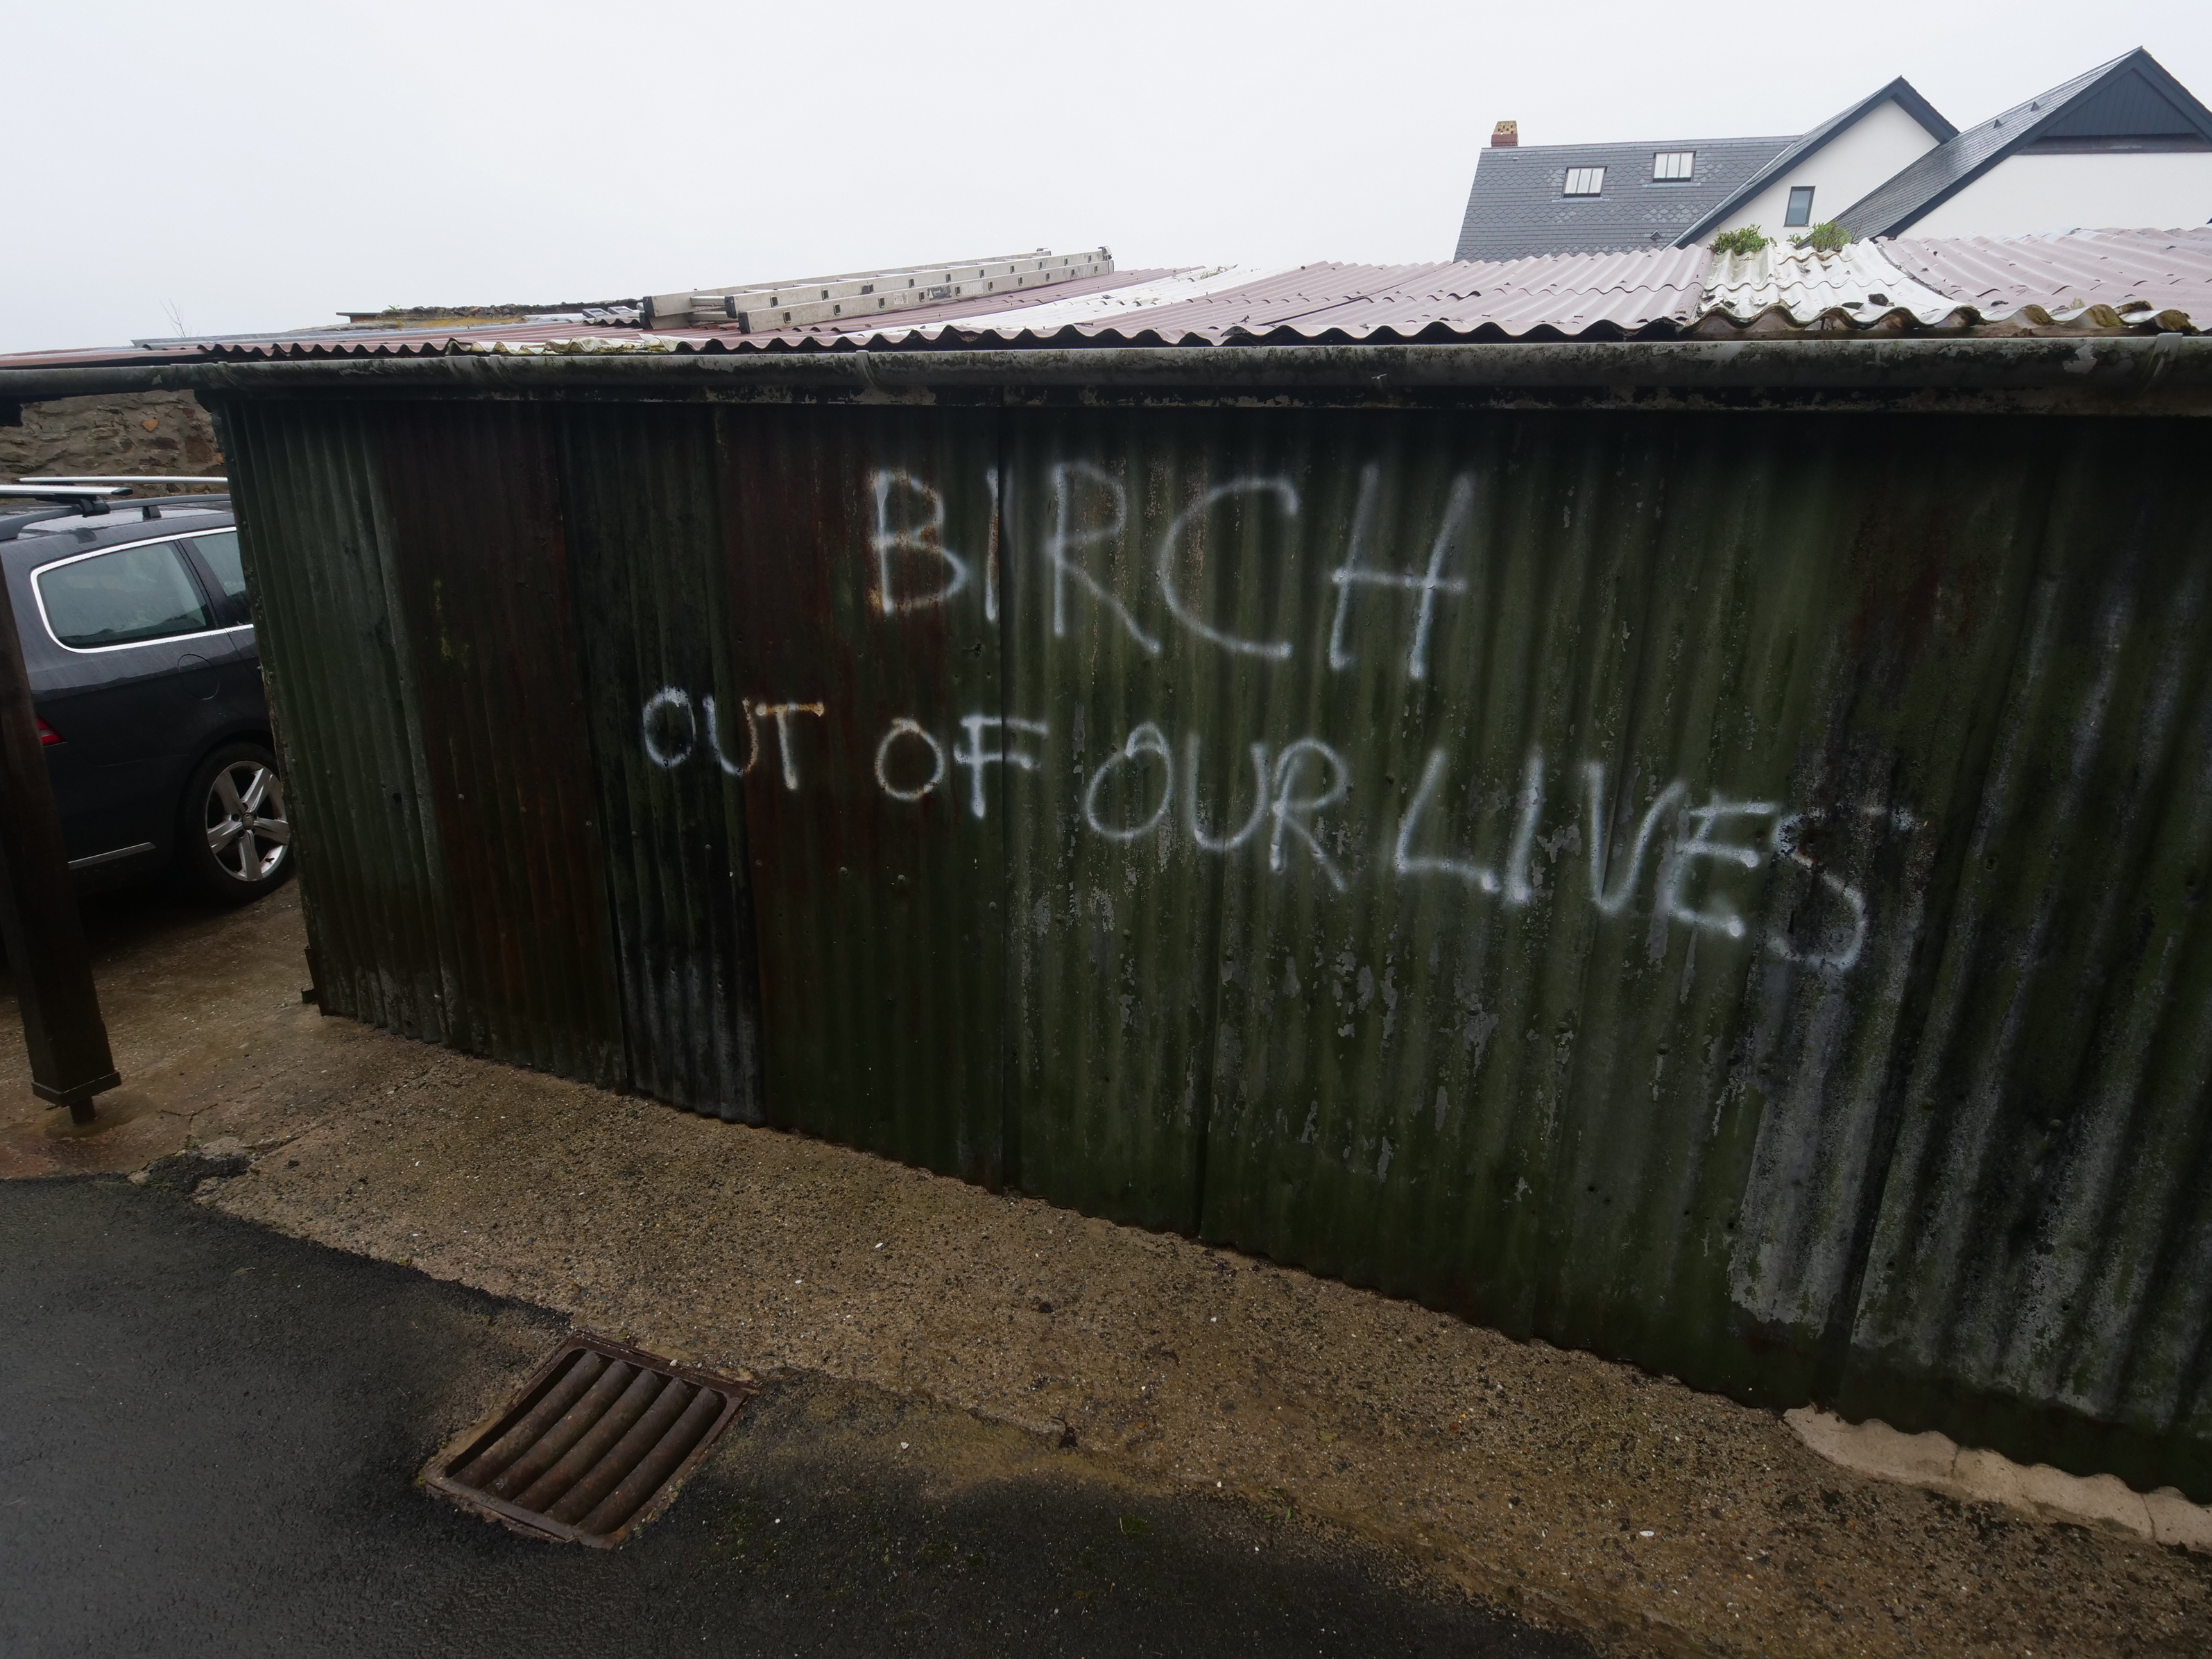 Anti-Birch graffiti in the village